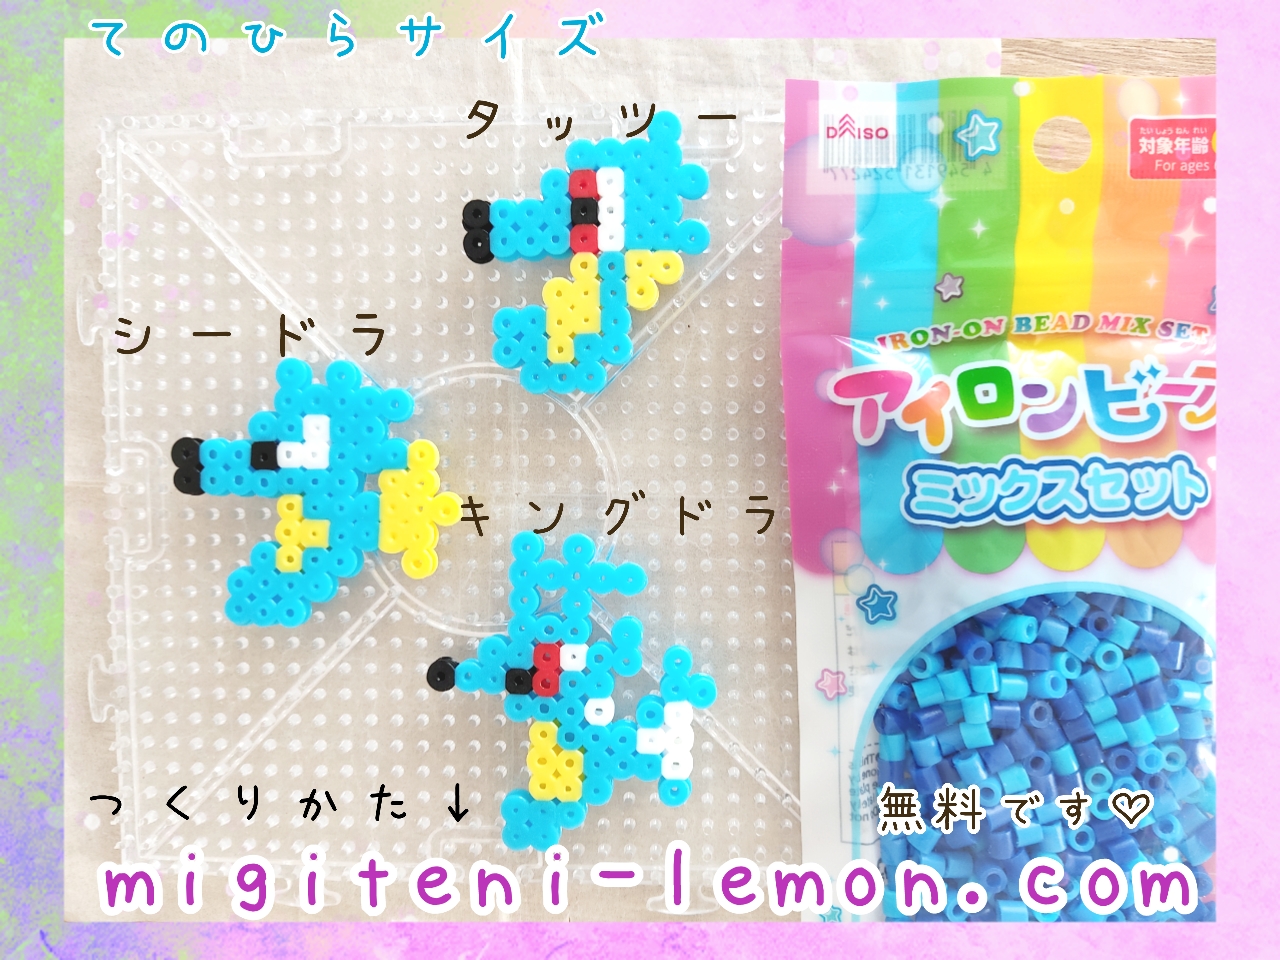 tattu-horsea-shidora-seadra-kingdora-pokemon-bdsp-handmade-beads-free-zuan-daiso